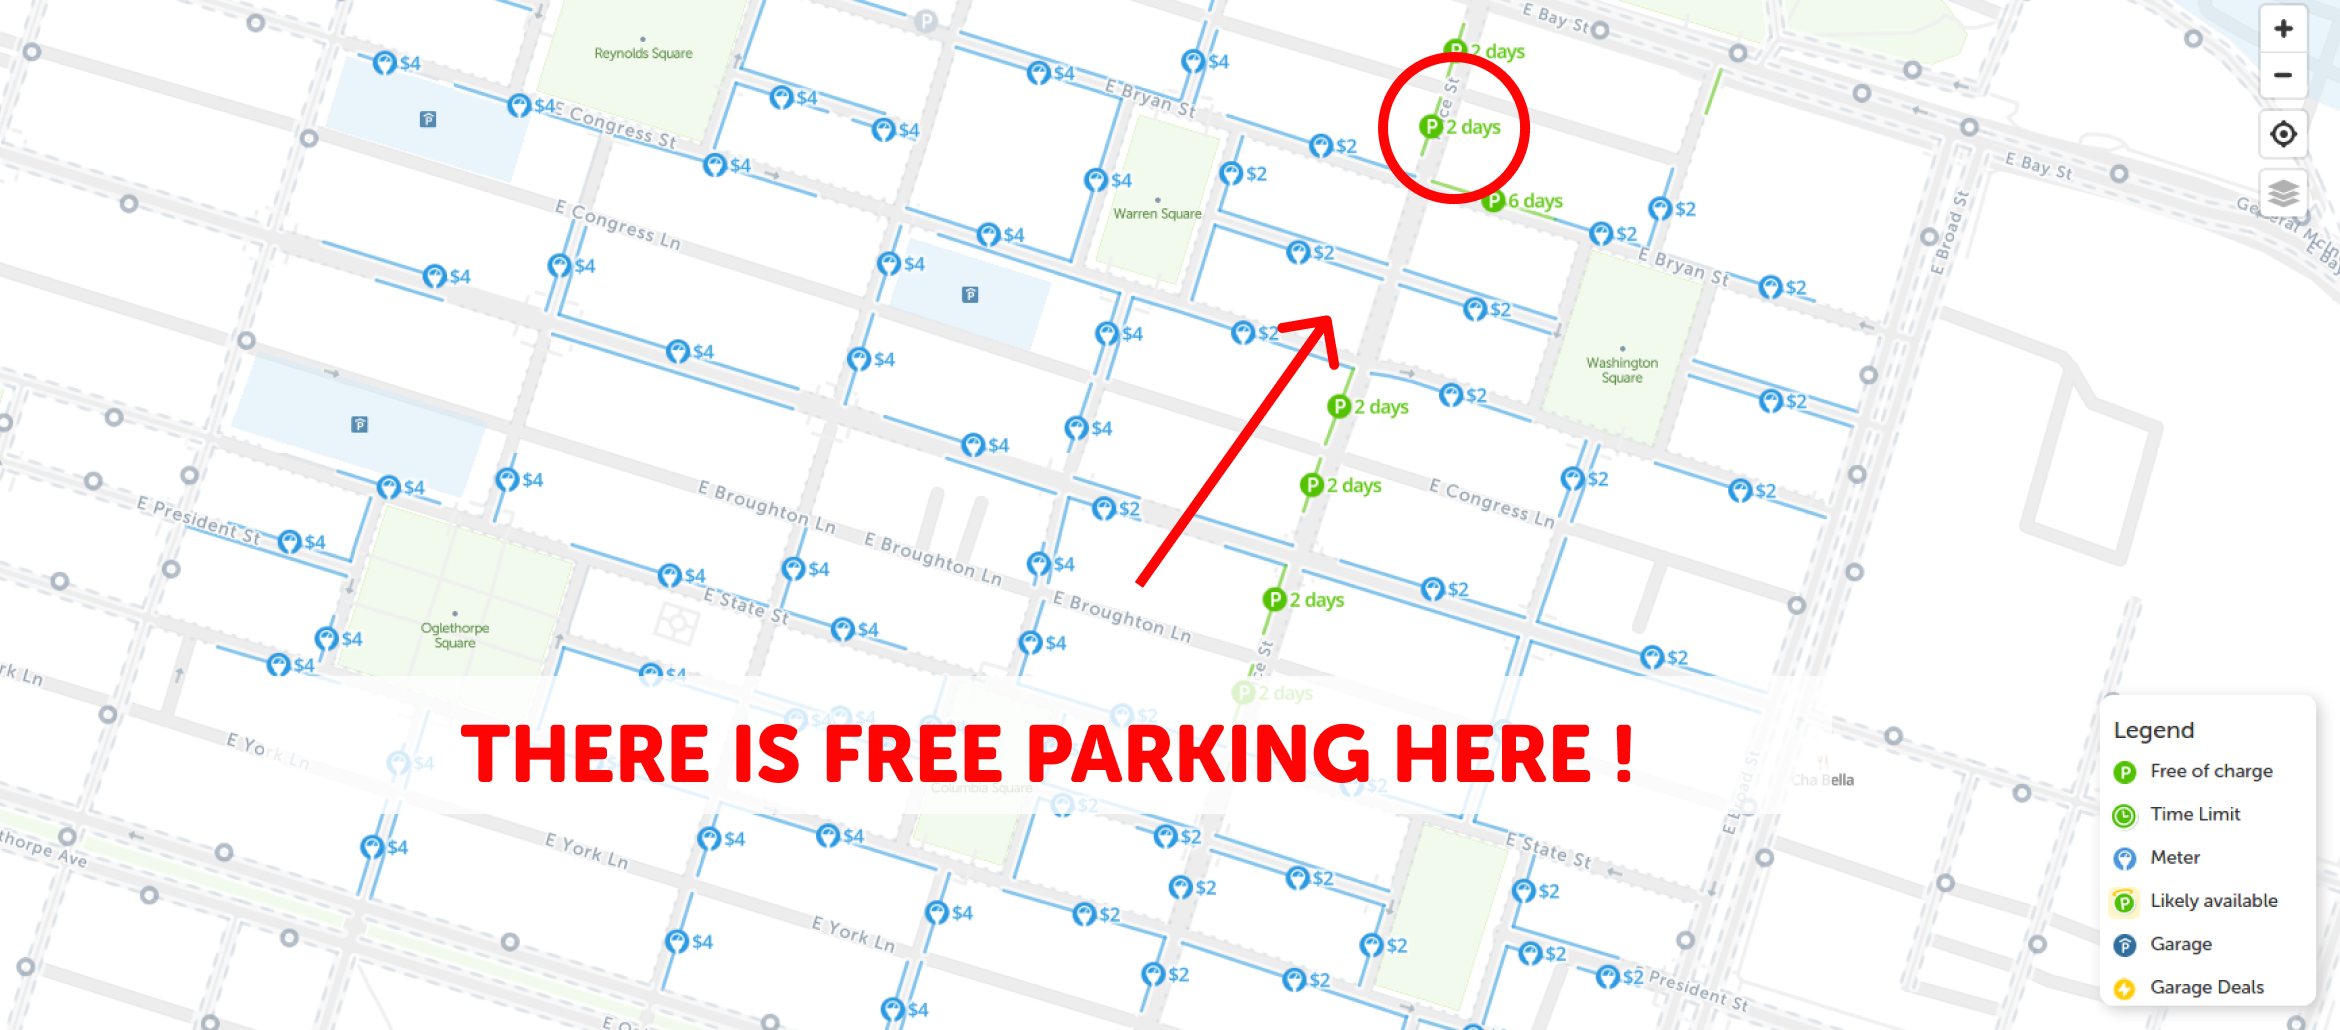 map of free parking in Savannah - SpotAngels